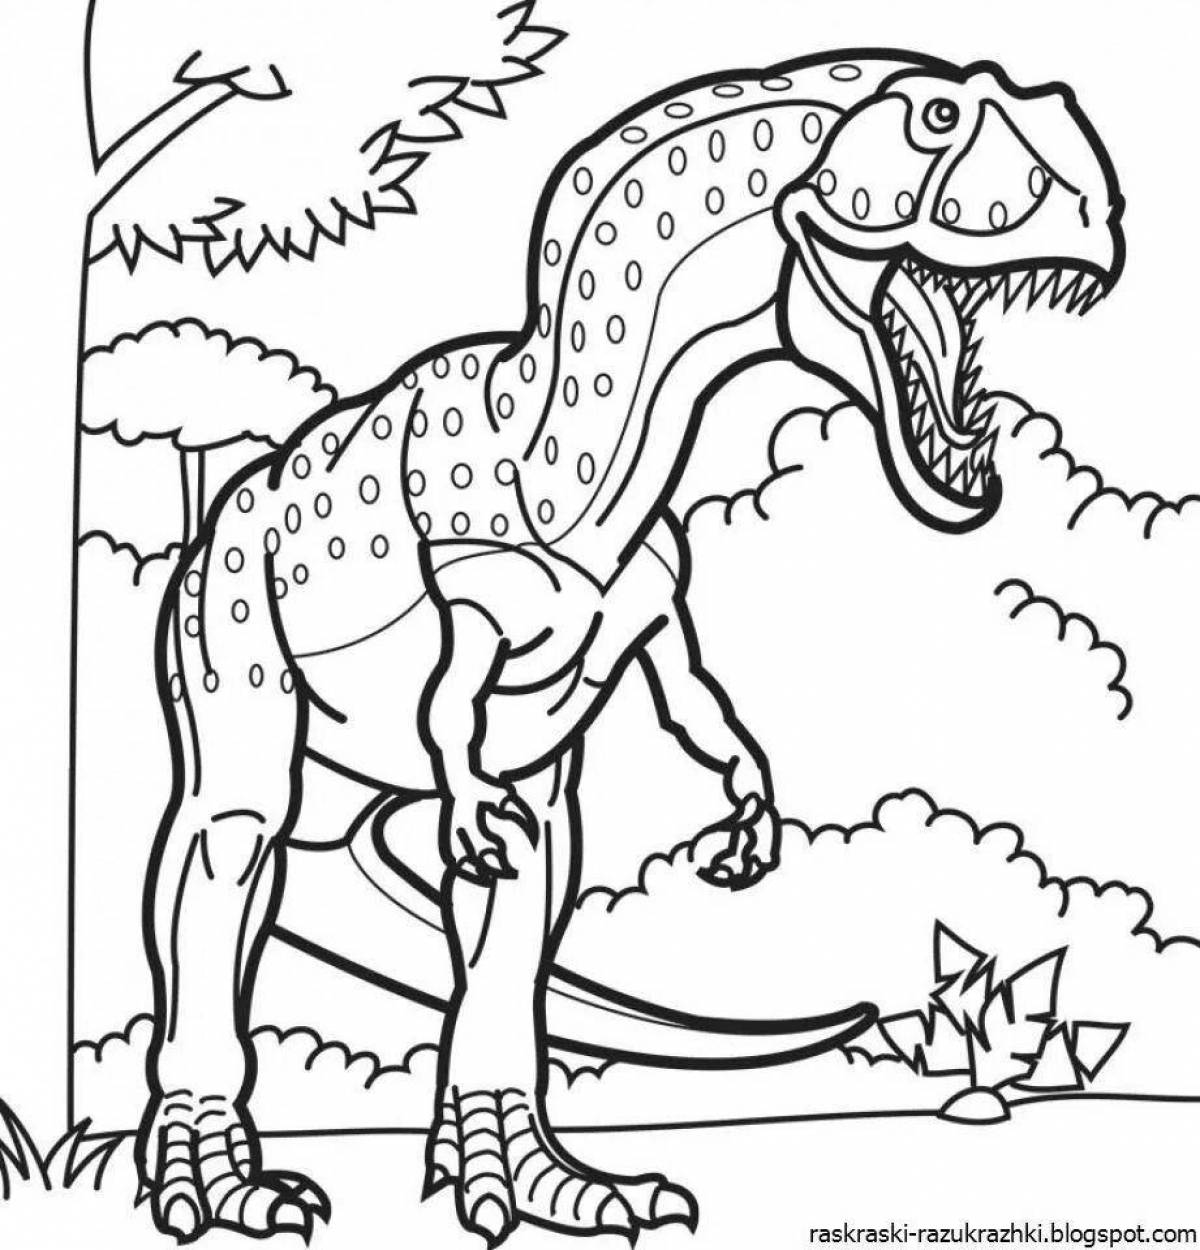 Coloring book glowing cartoon dinosaur